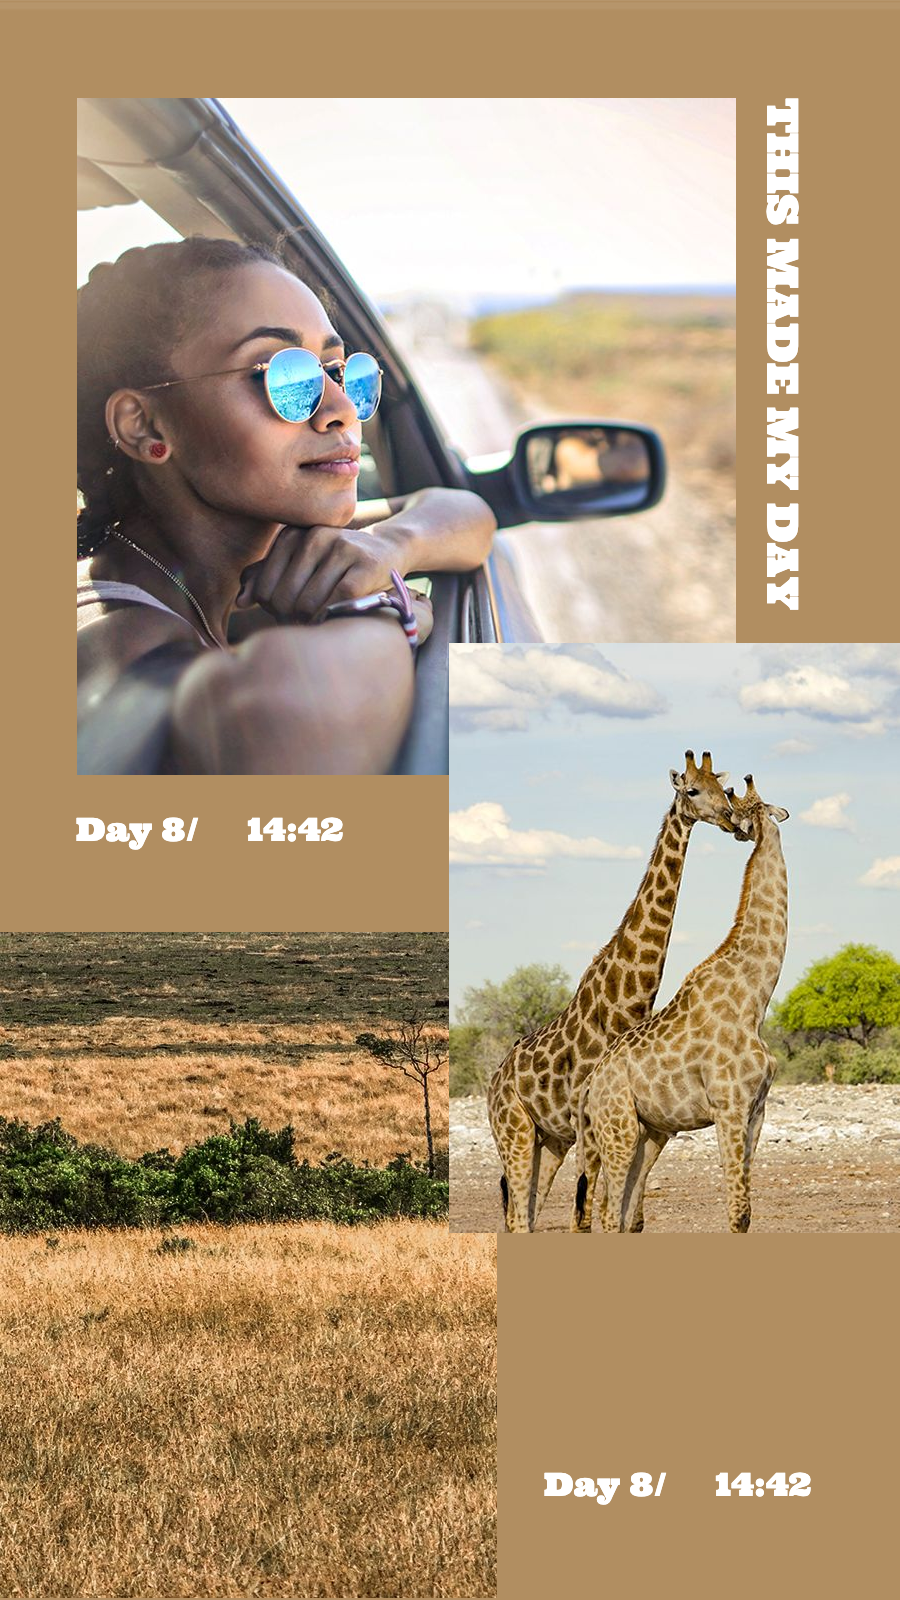 Grassland Safari Tourist Photo with Giraffes Instagram Story预览效果